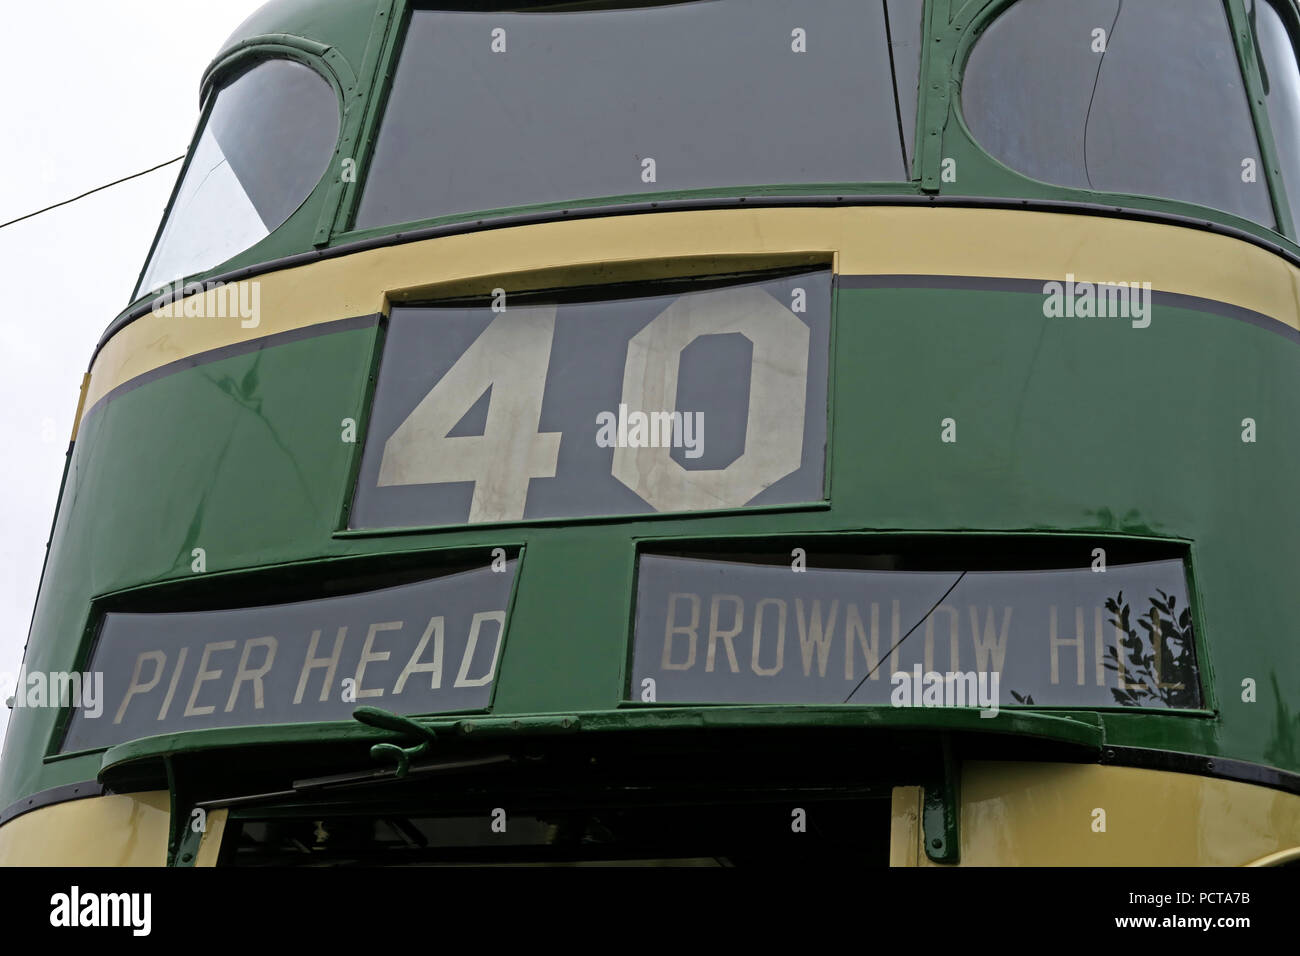 Wirral public Tram, Green Cream Pierhead Brownlow hill tram, Merseyside, North West England, UK Stock Photo